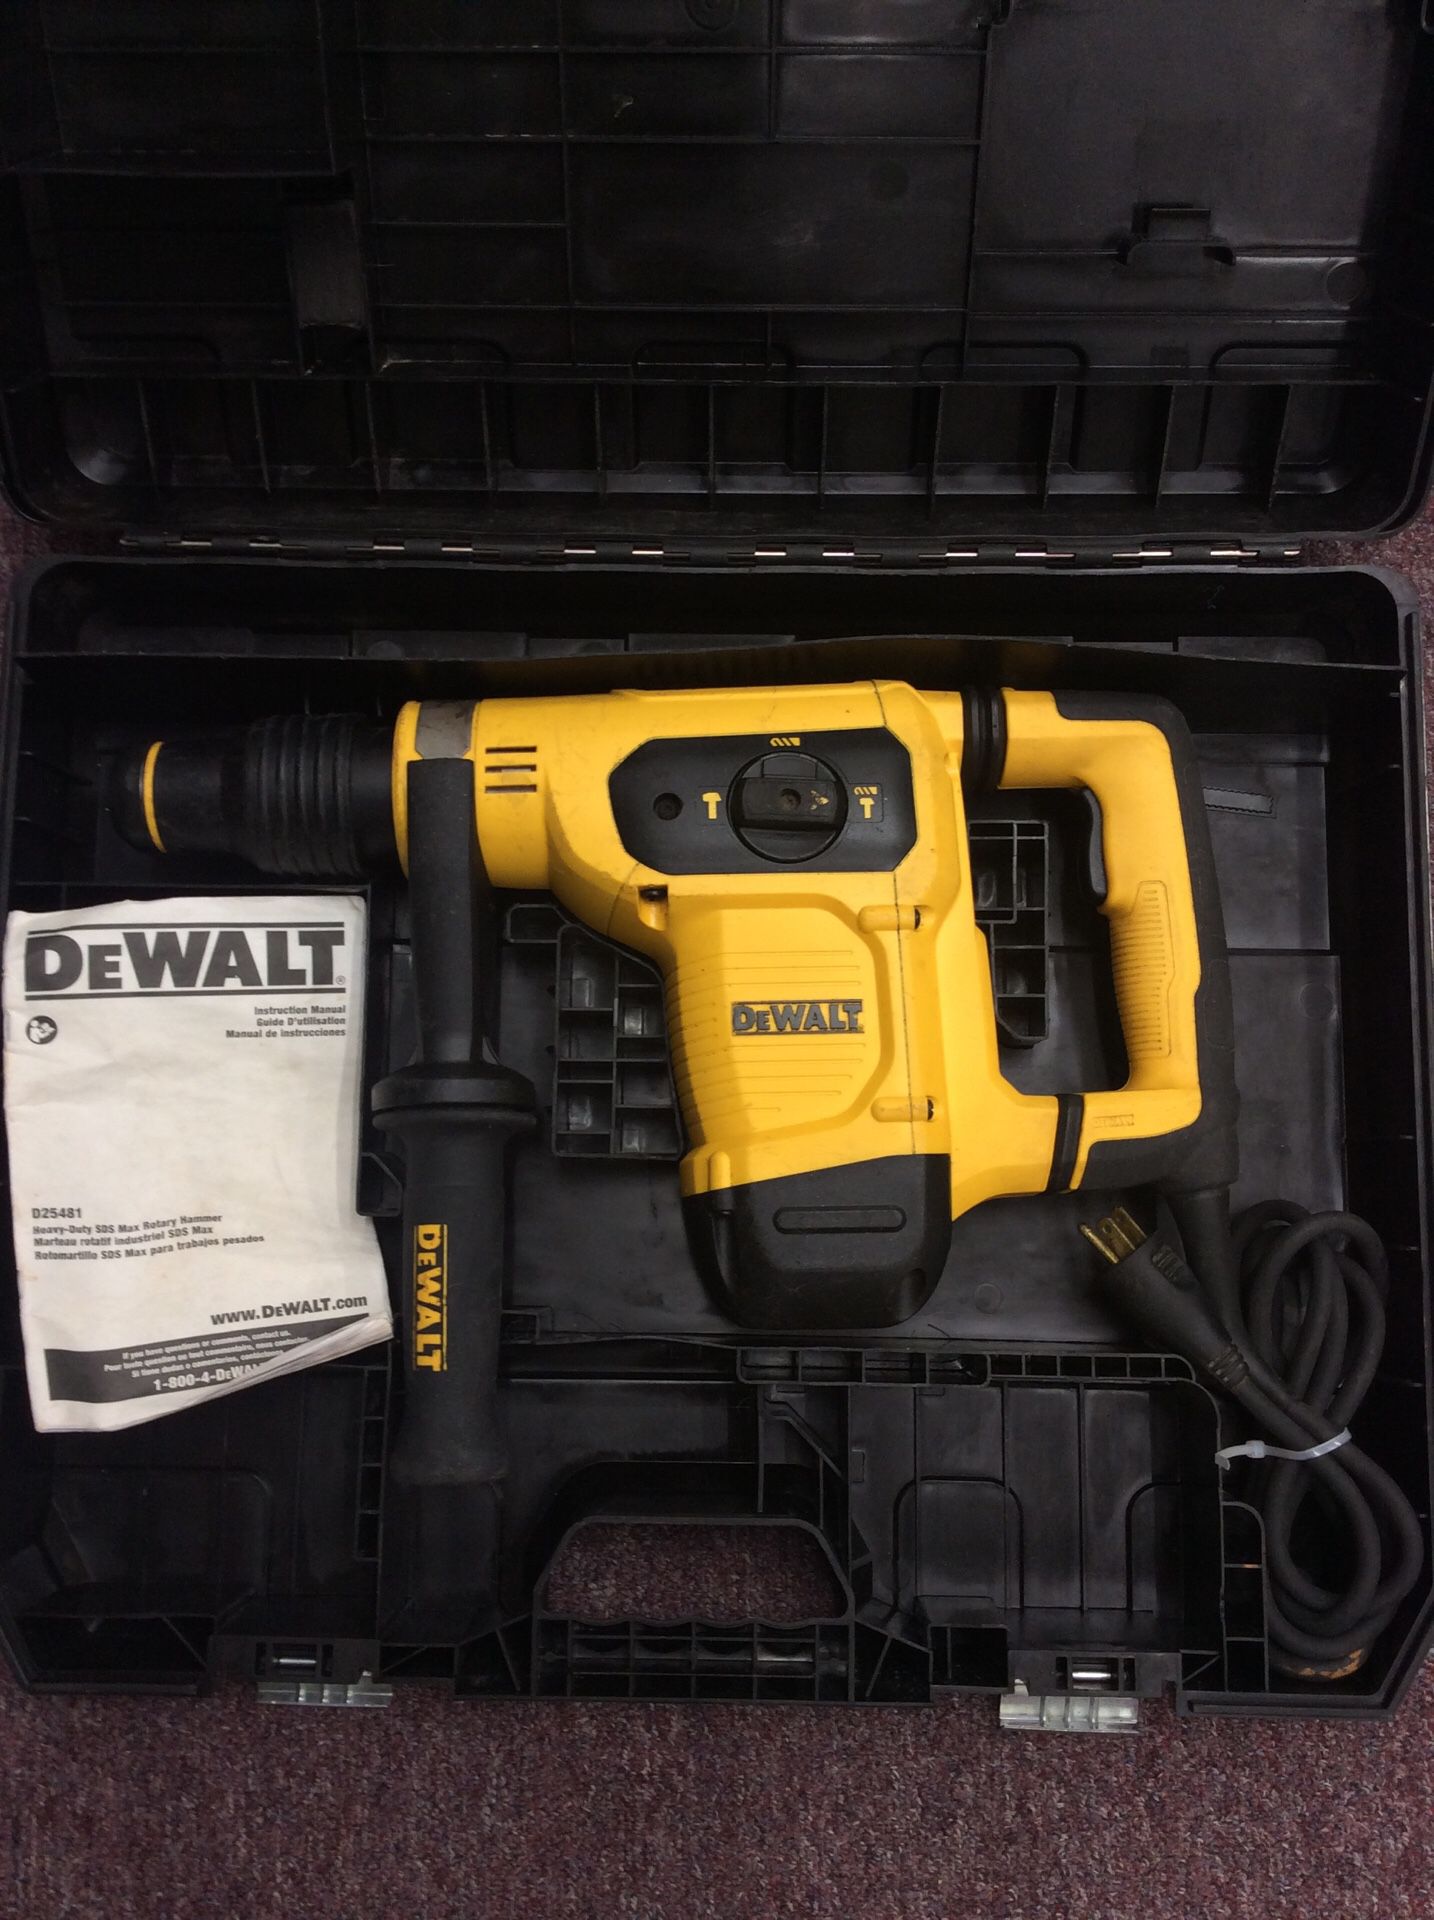 Dewalt D25481 1-9/16” SDS MAX Rotary Hammer Drill in Case (19-2167)